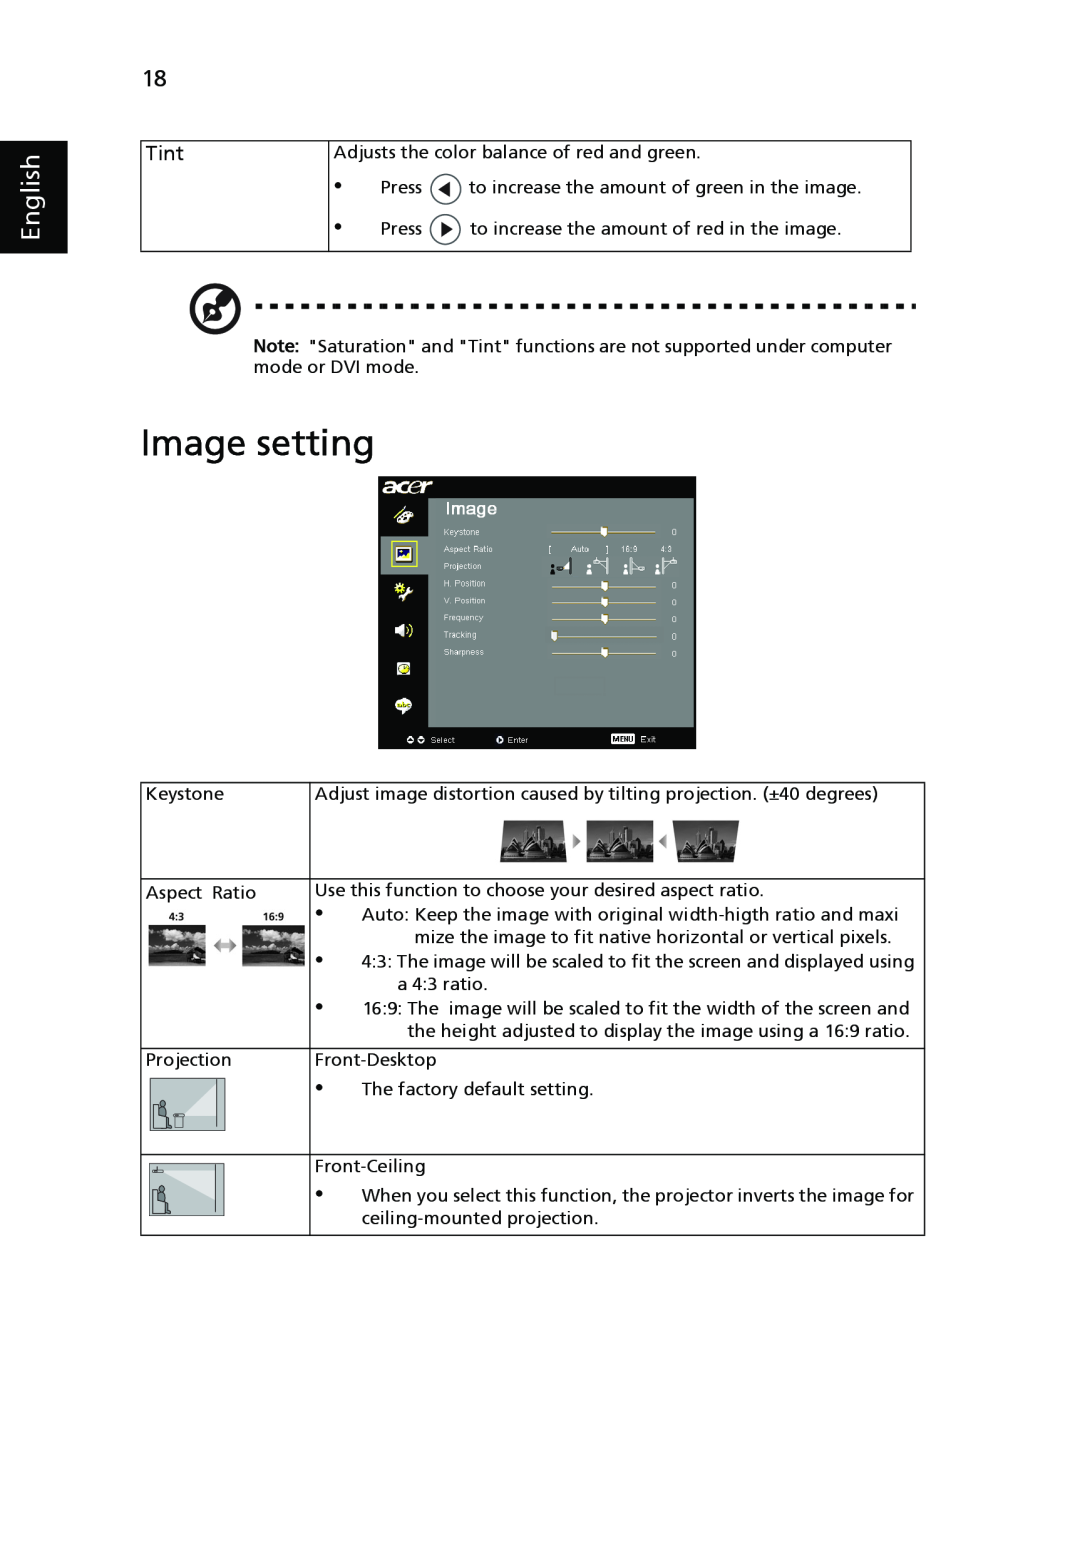 Acer P1265, P5270 manual Image setting, English, Tint 